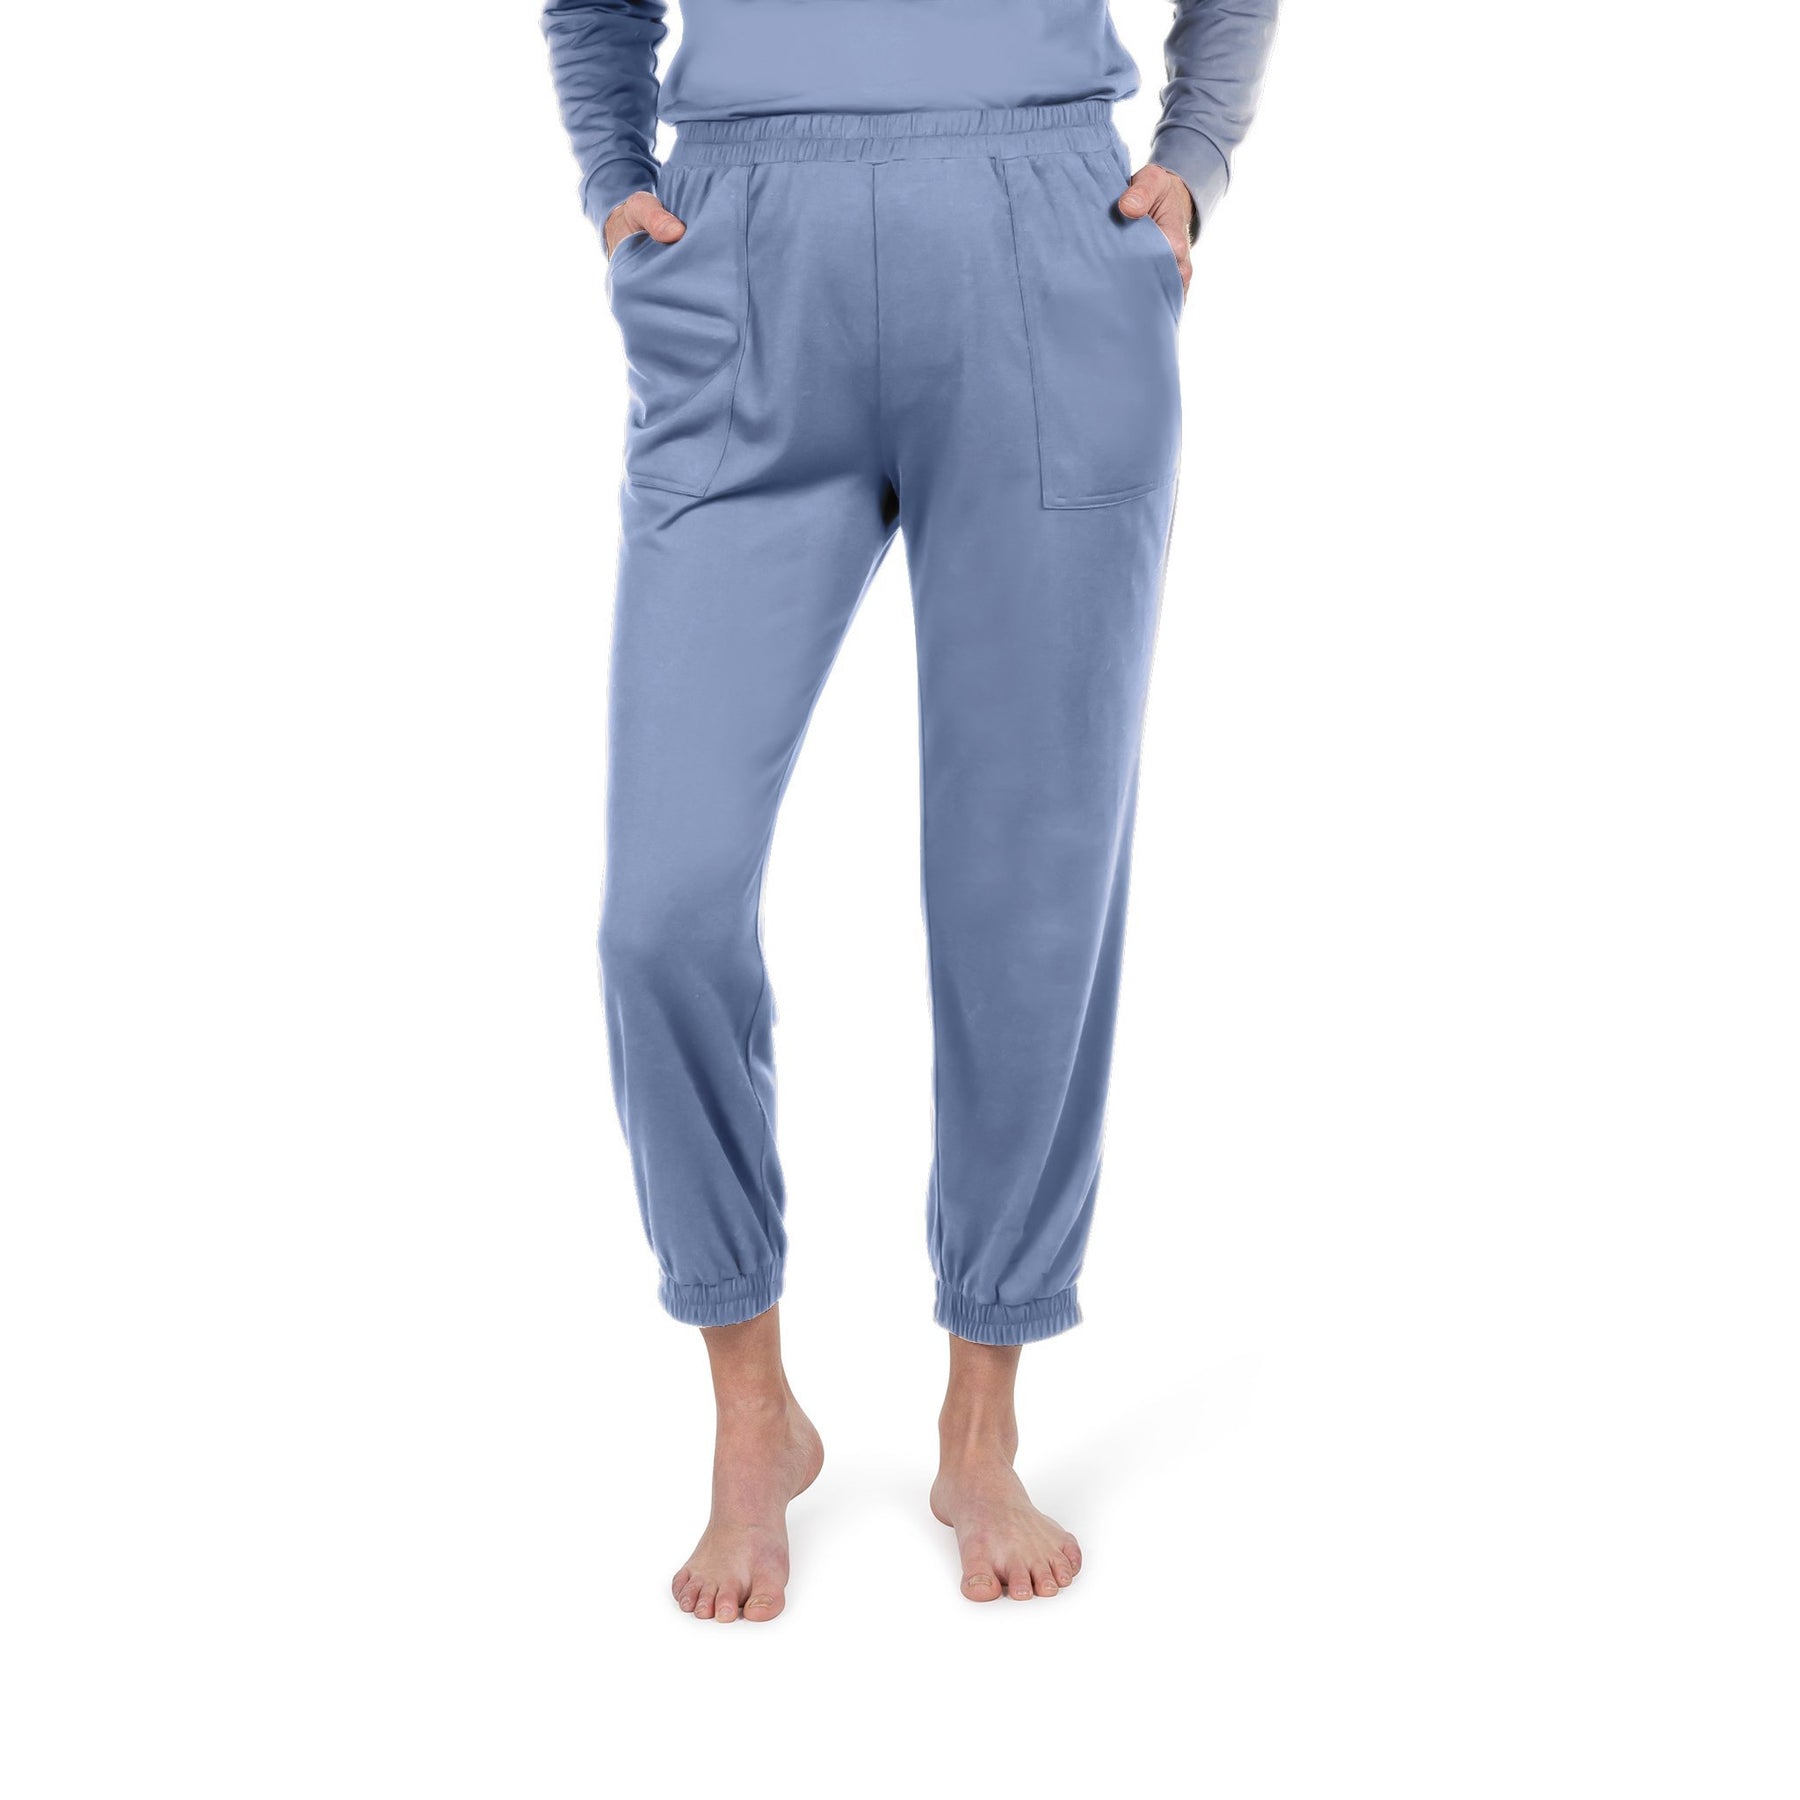 Women's Pajama Pants, Hot Flash Pajama Pants